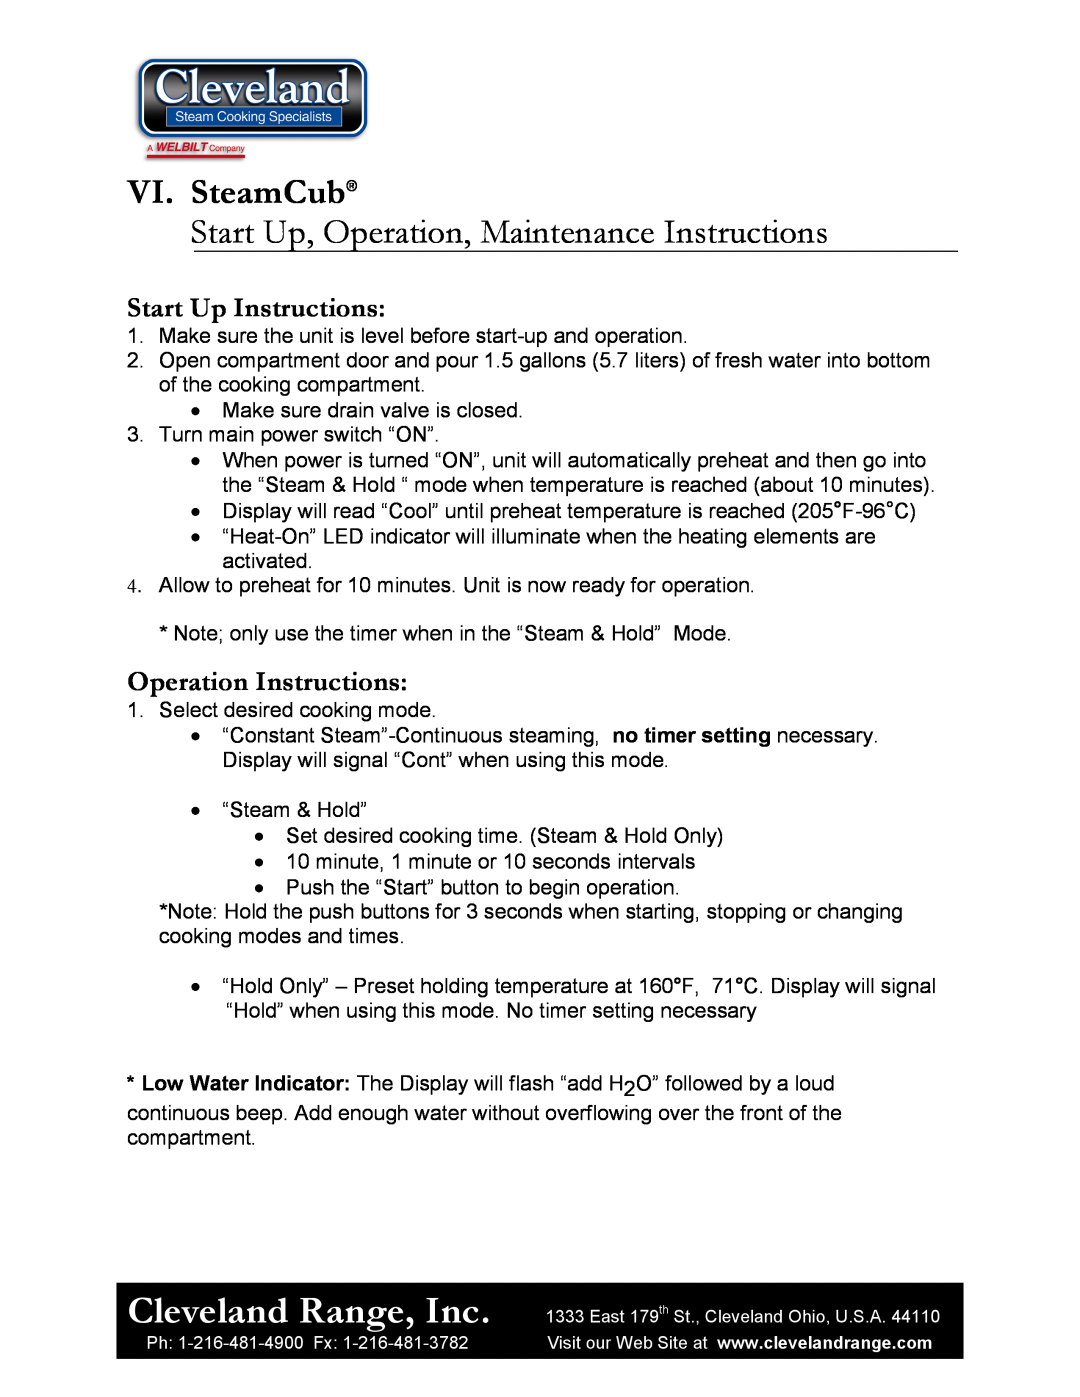 Cleveland Range 1SCE manual VI. SteamCub, Cleveland Range, Inc, Start Up, Operation, Maintenance Instructions 